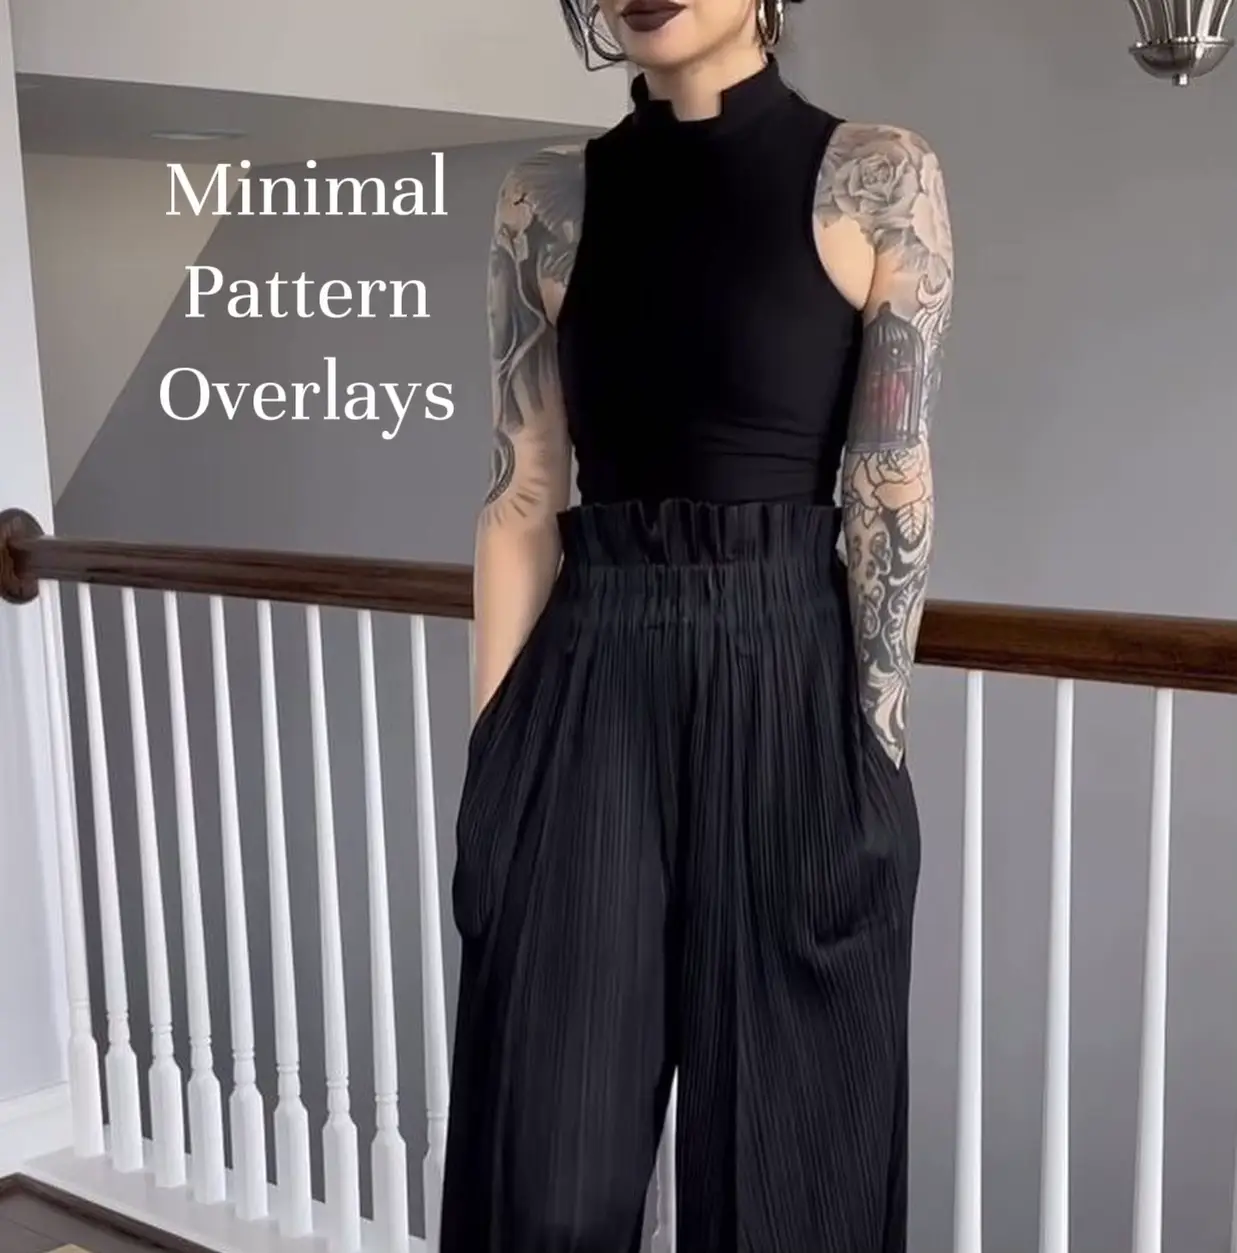  SOLILOQUY Women Gothic Dress Punk Witch Off Shoulder